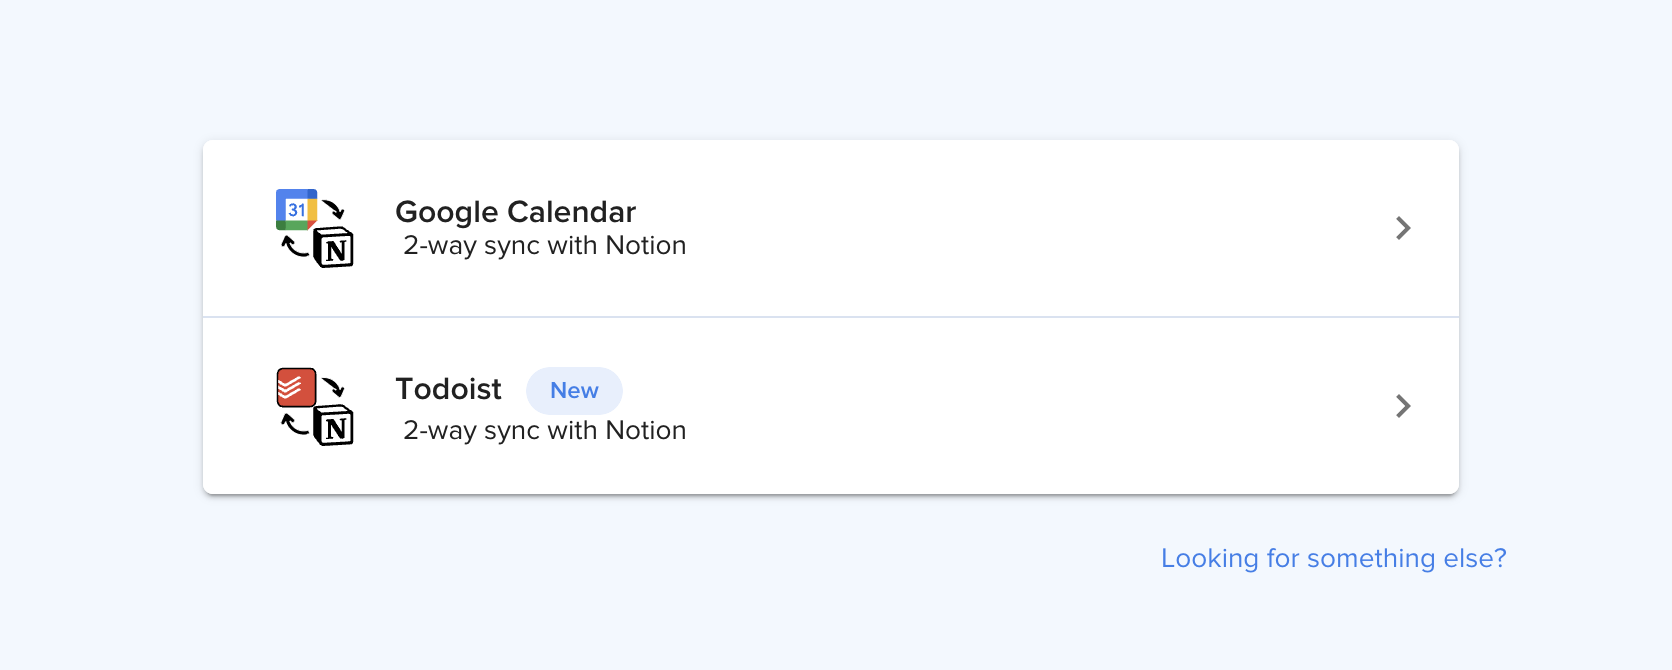 Google Calendar 側を選択